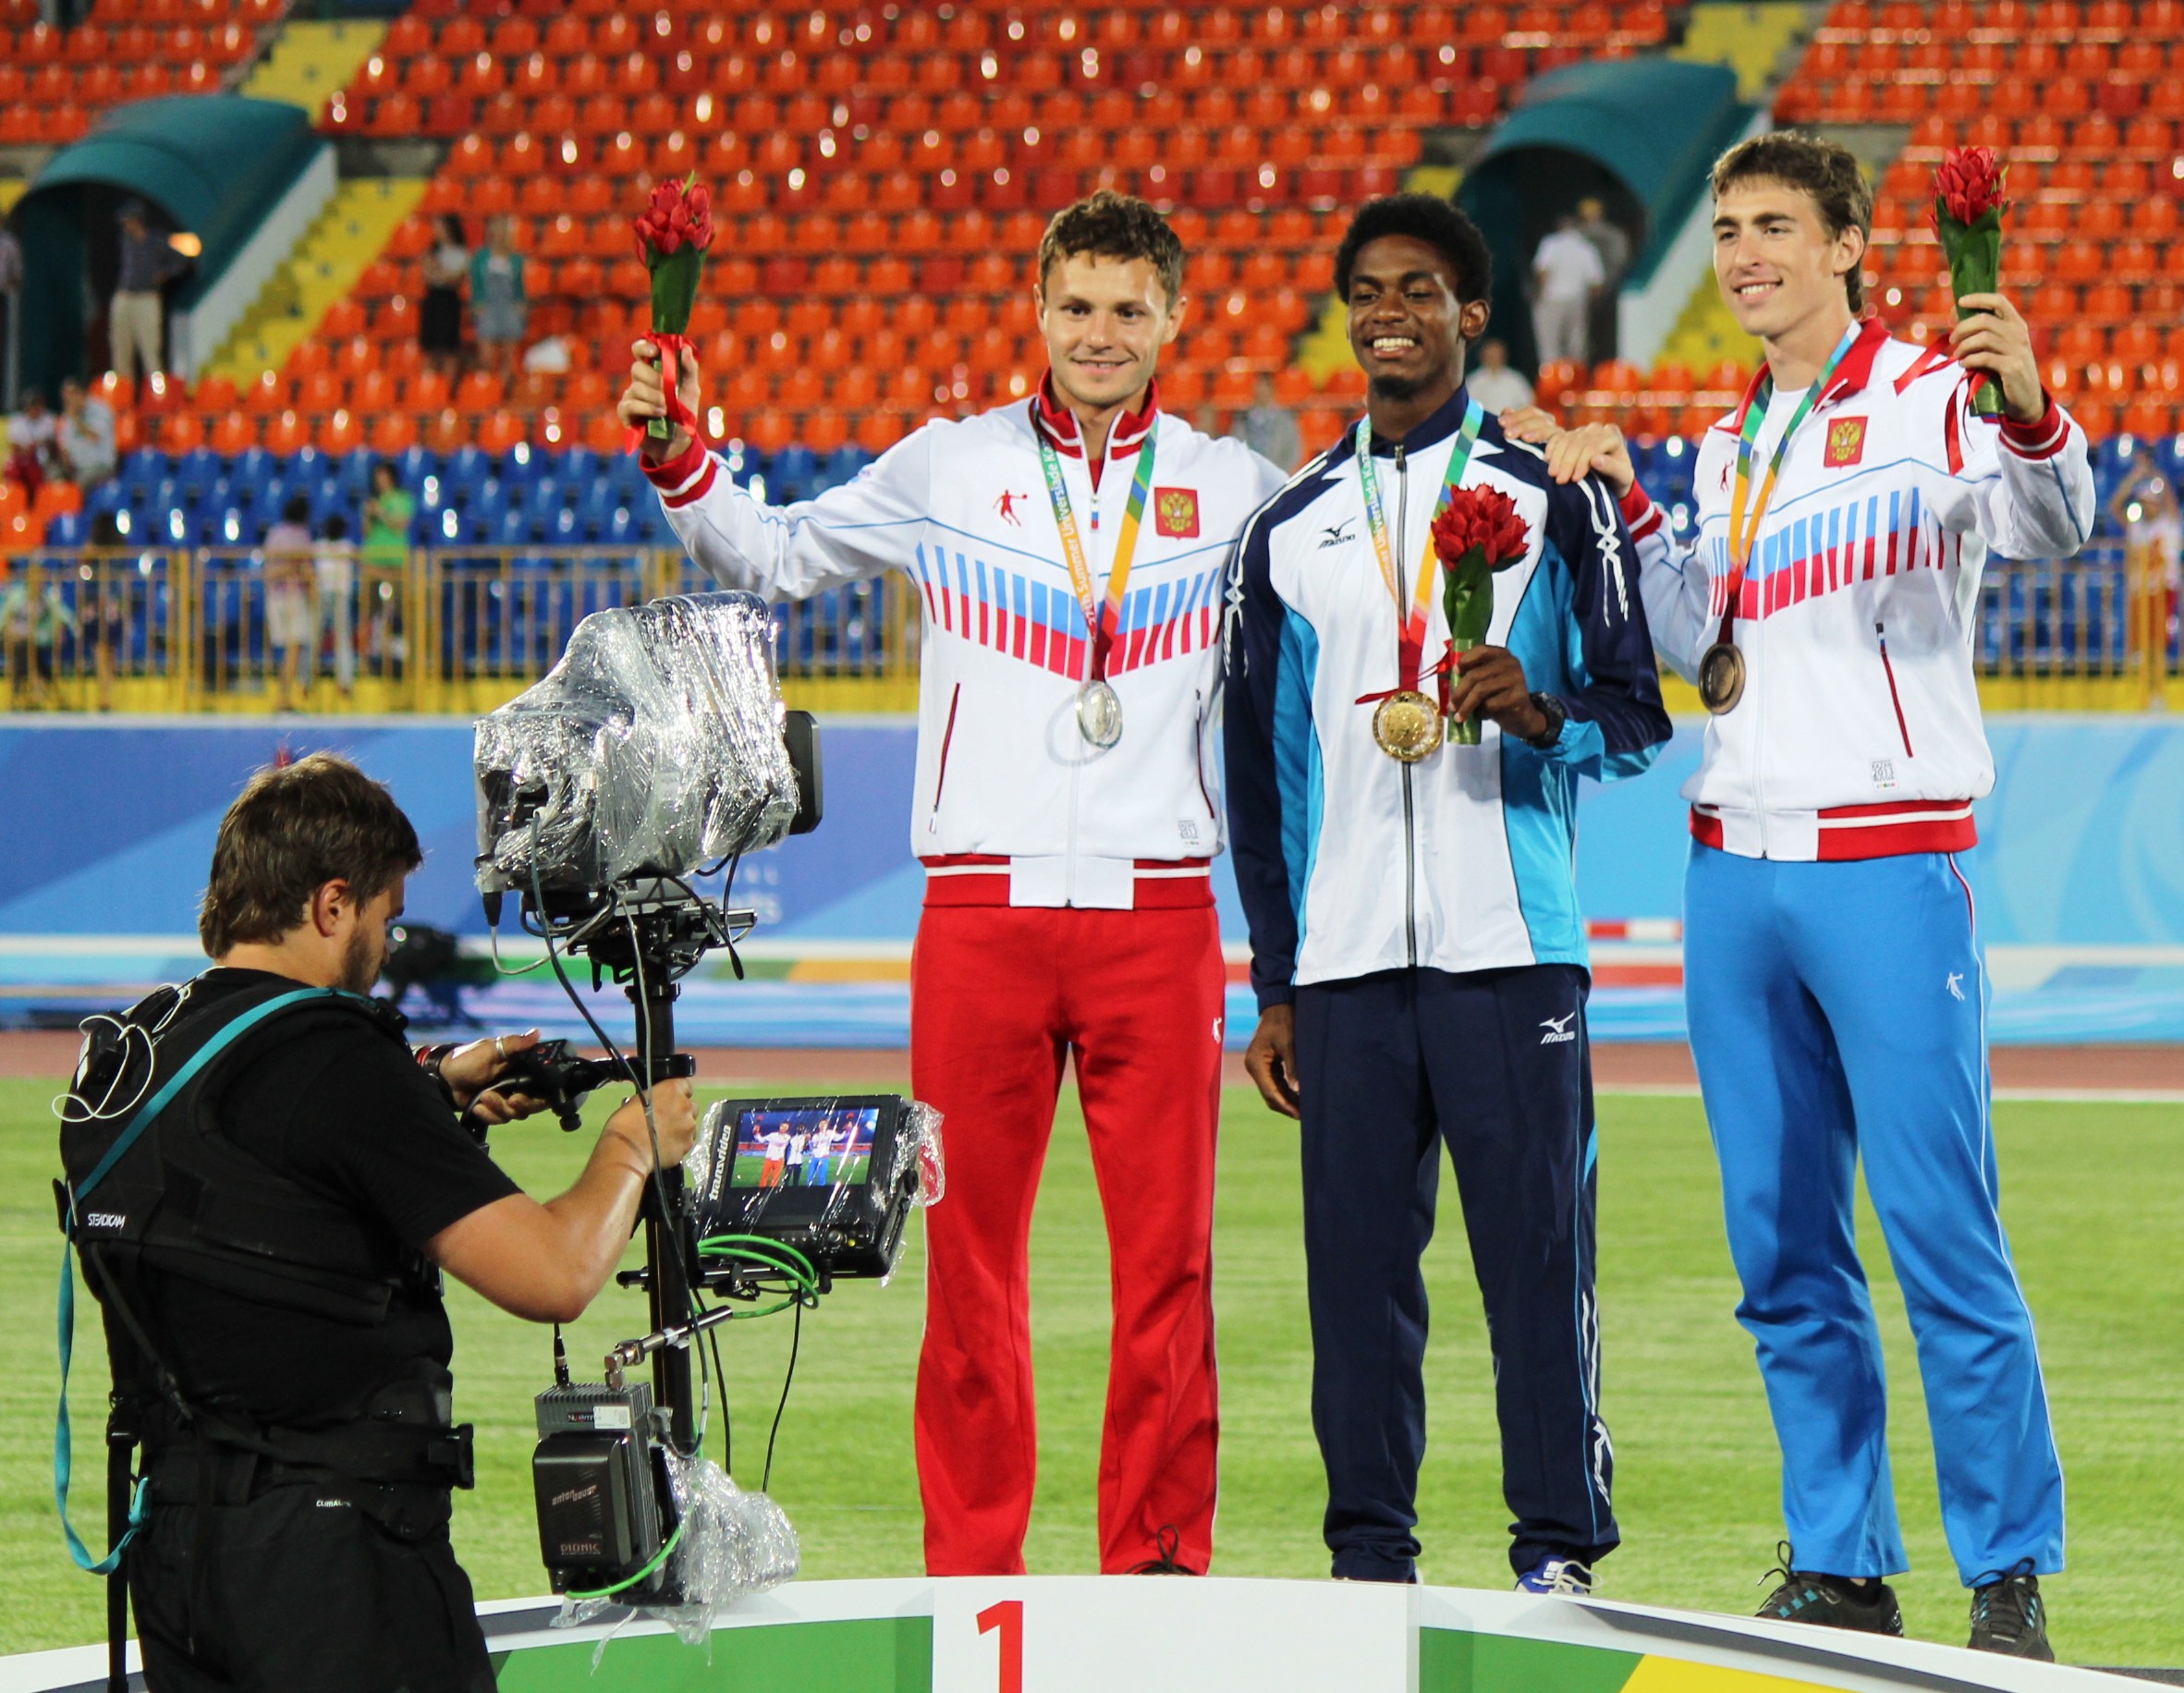 Eddie Lovett (center) wins gold at World University Games